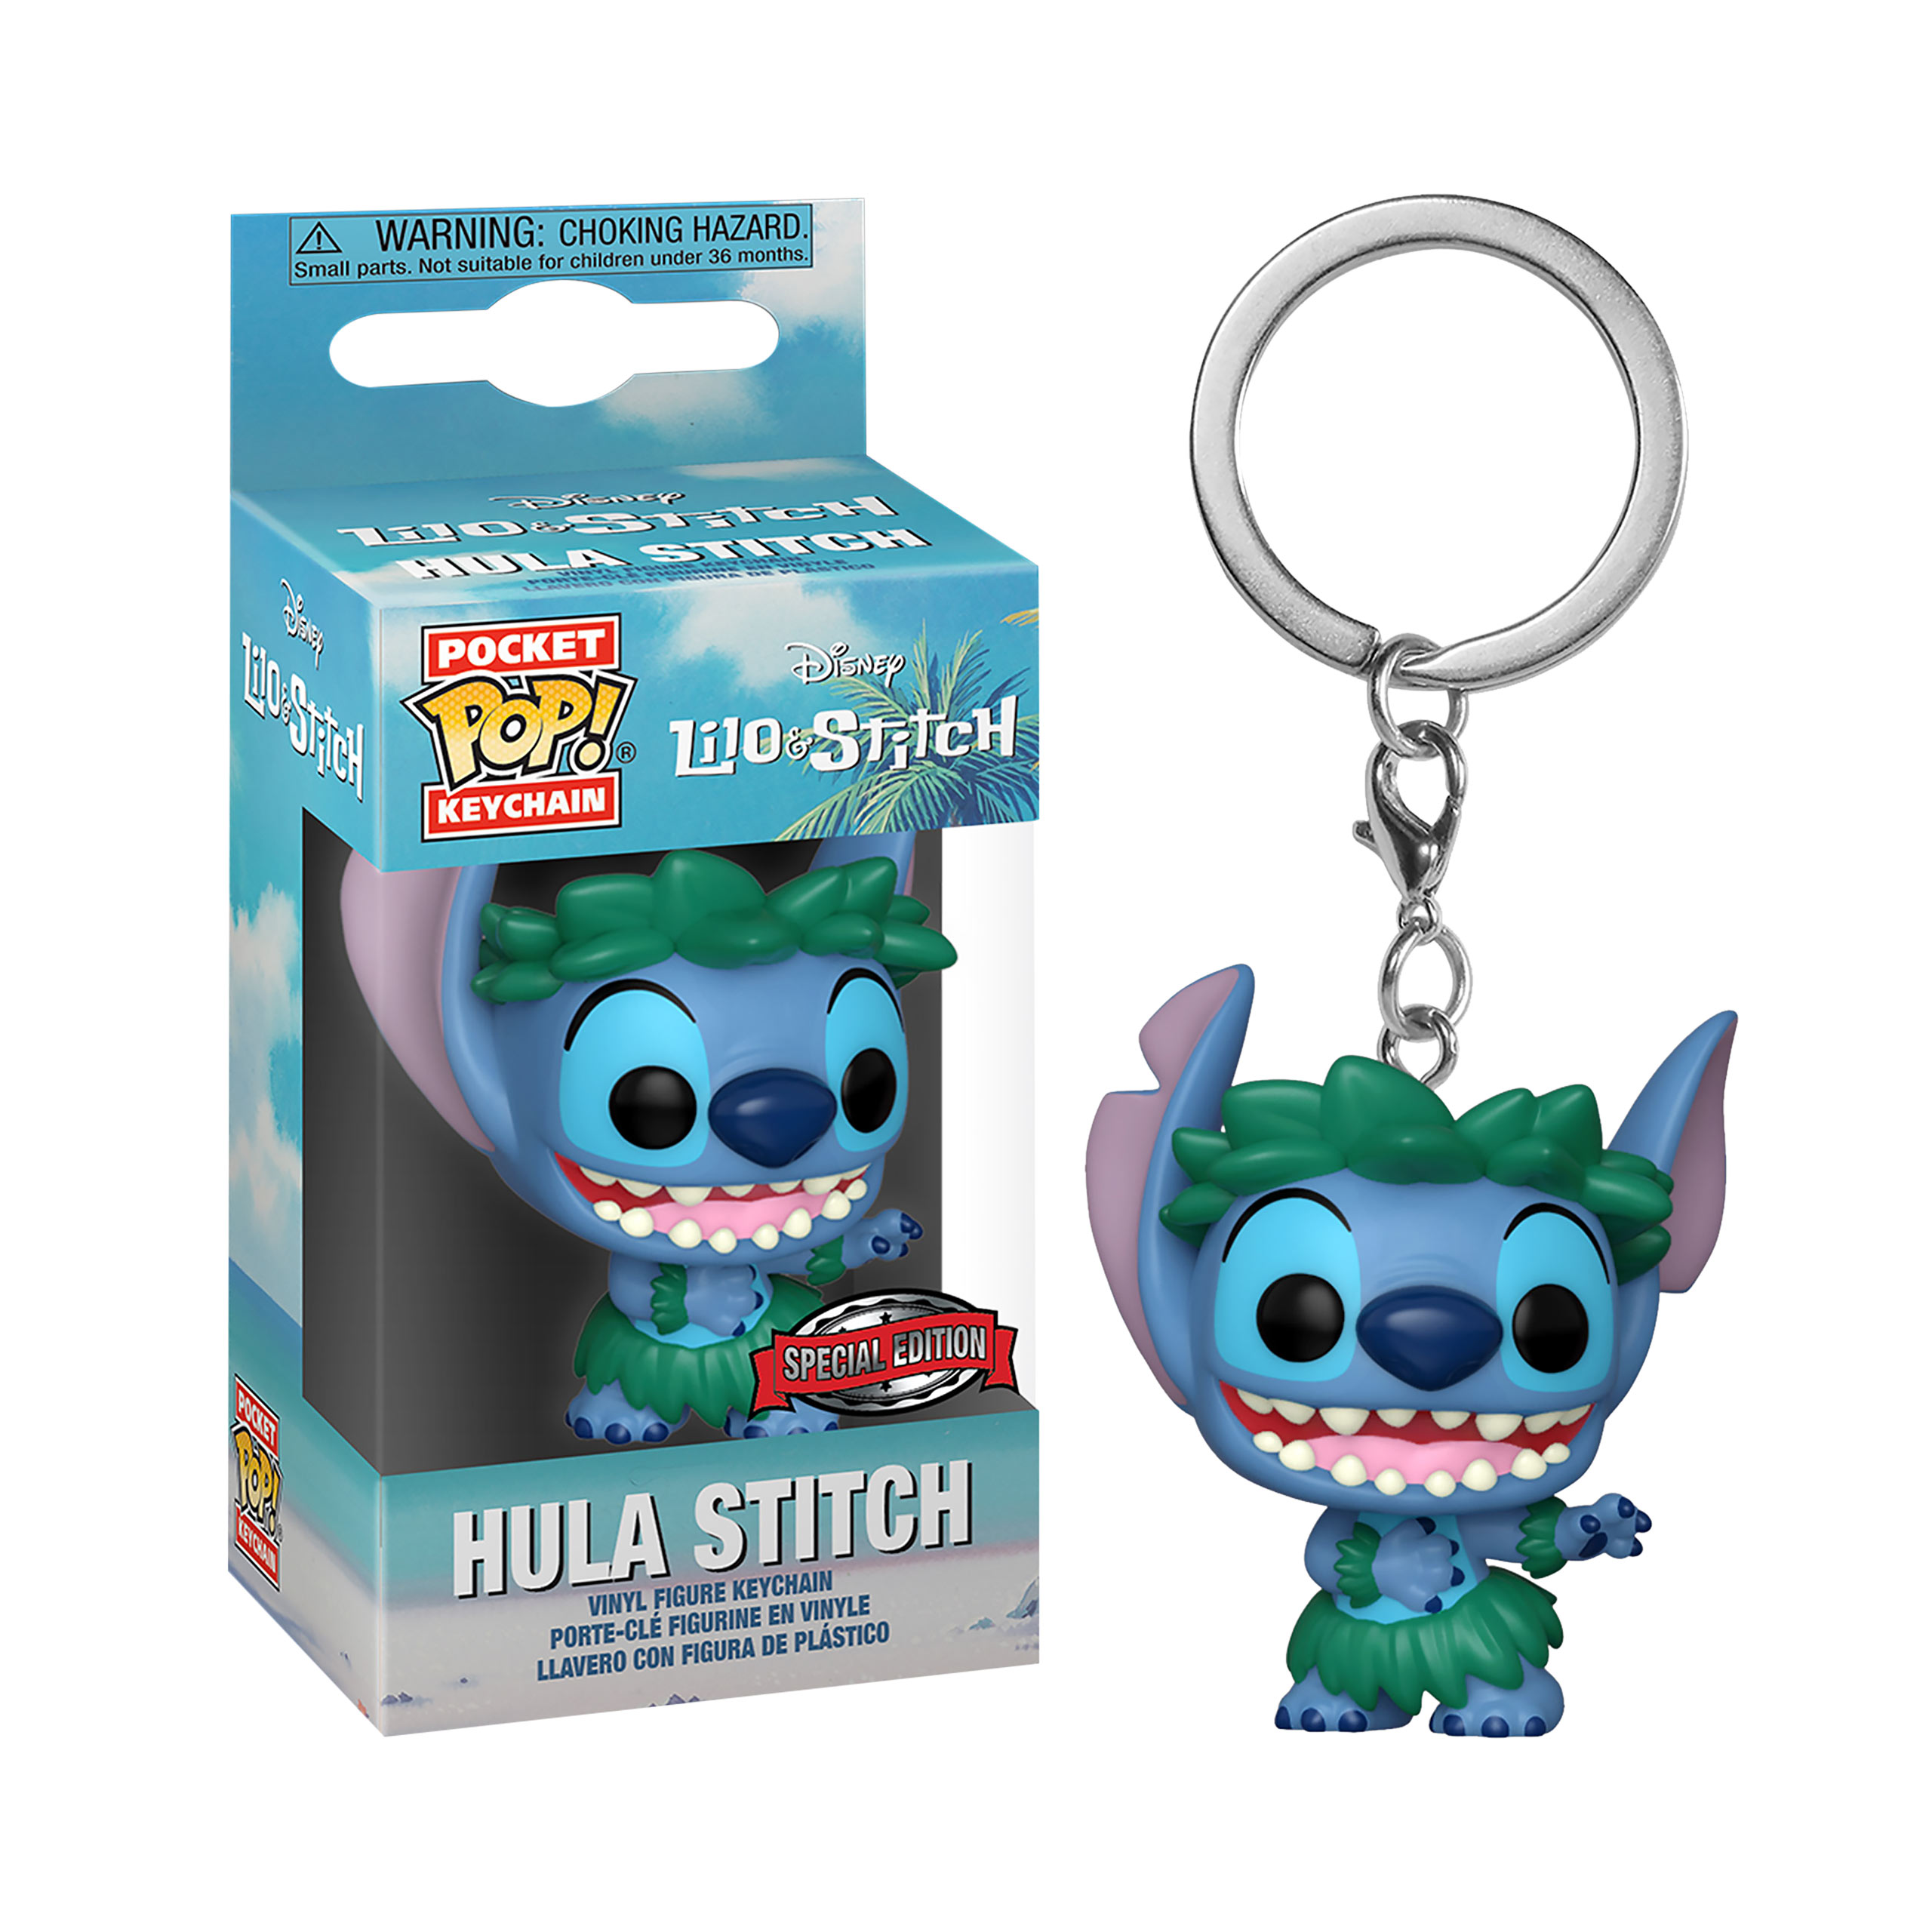 Lilo & Stitch - Hula Stitch Funko Pop Schlüsselanhänger